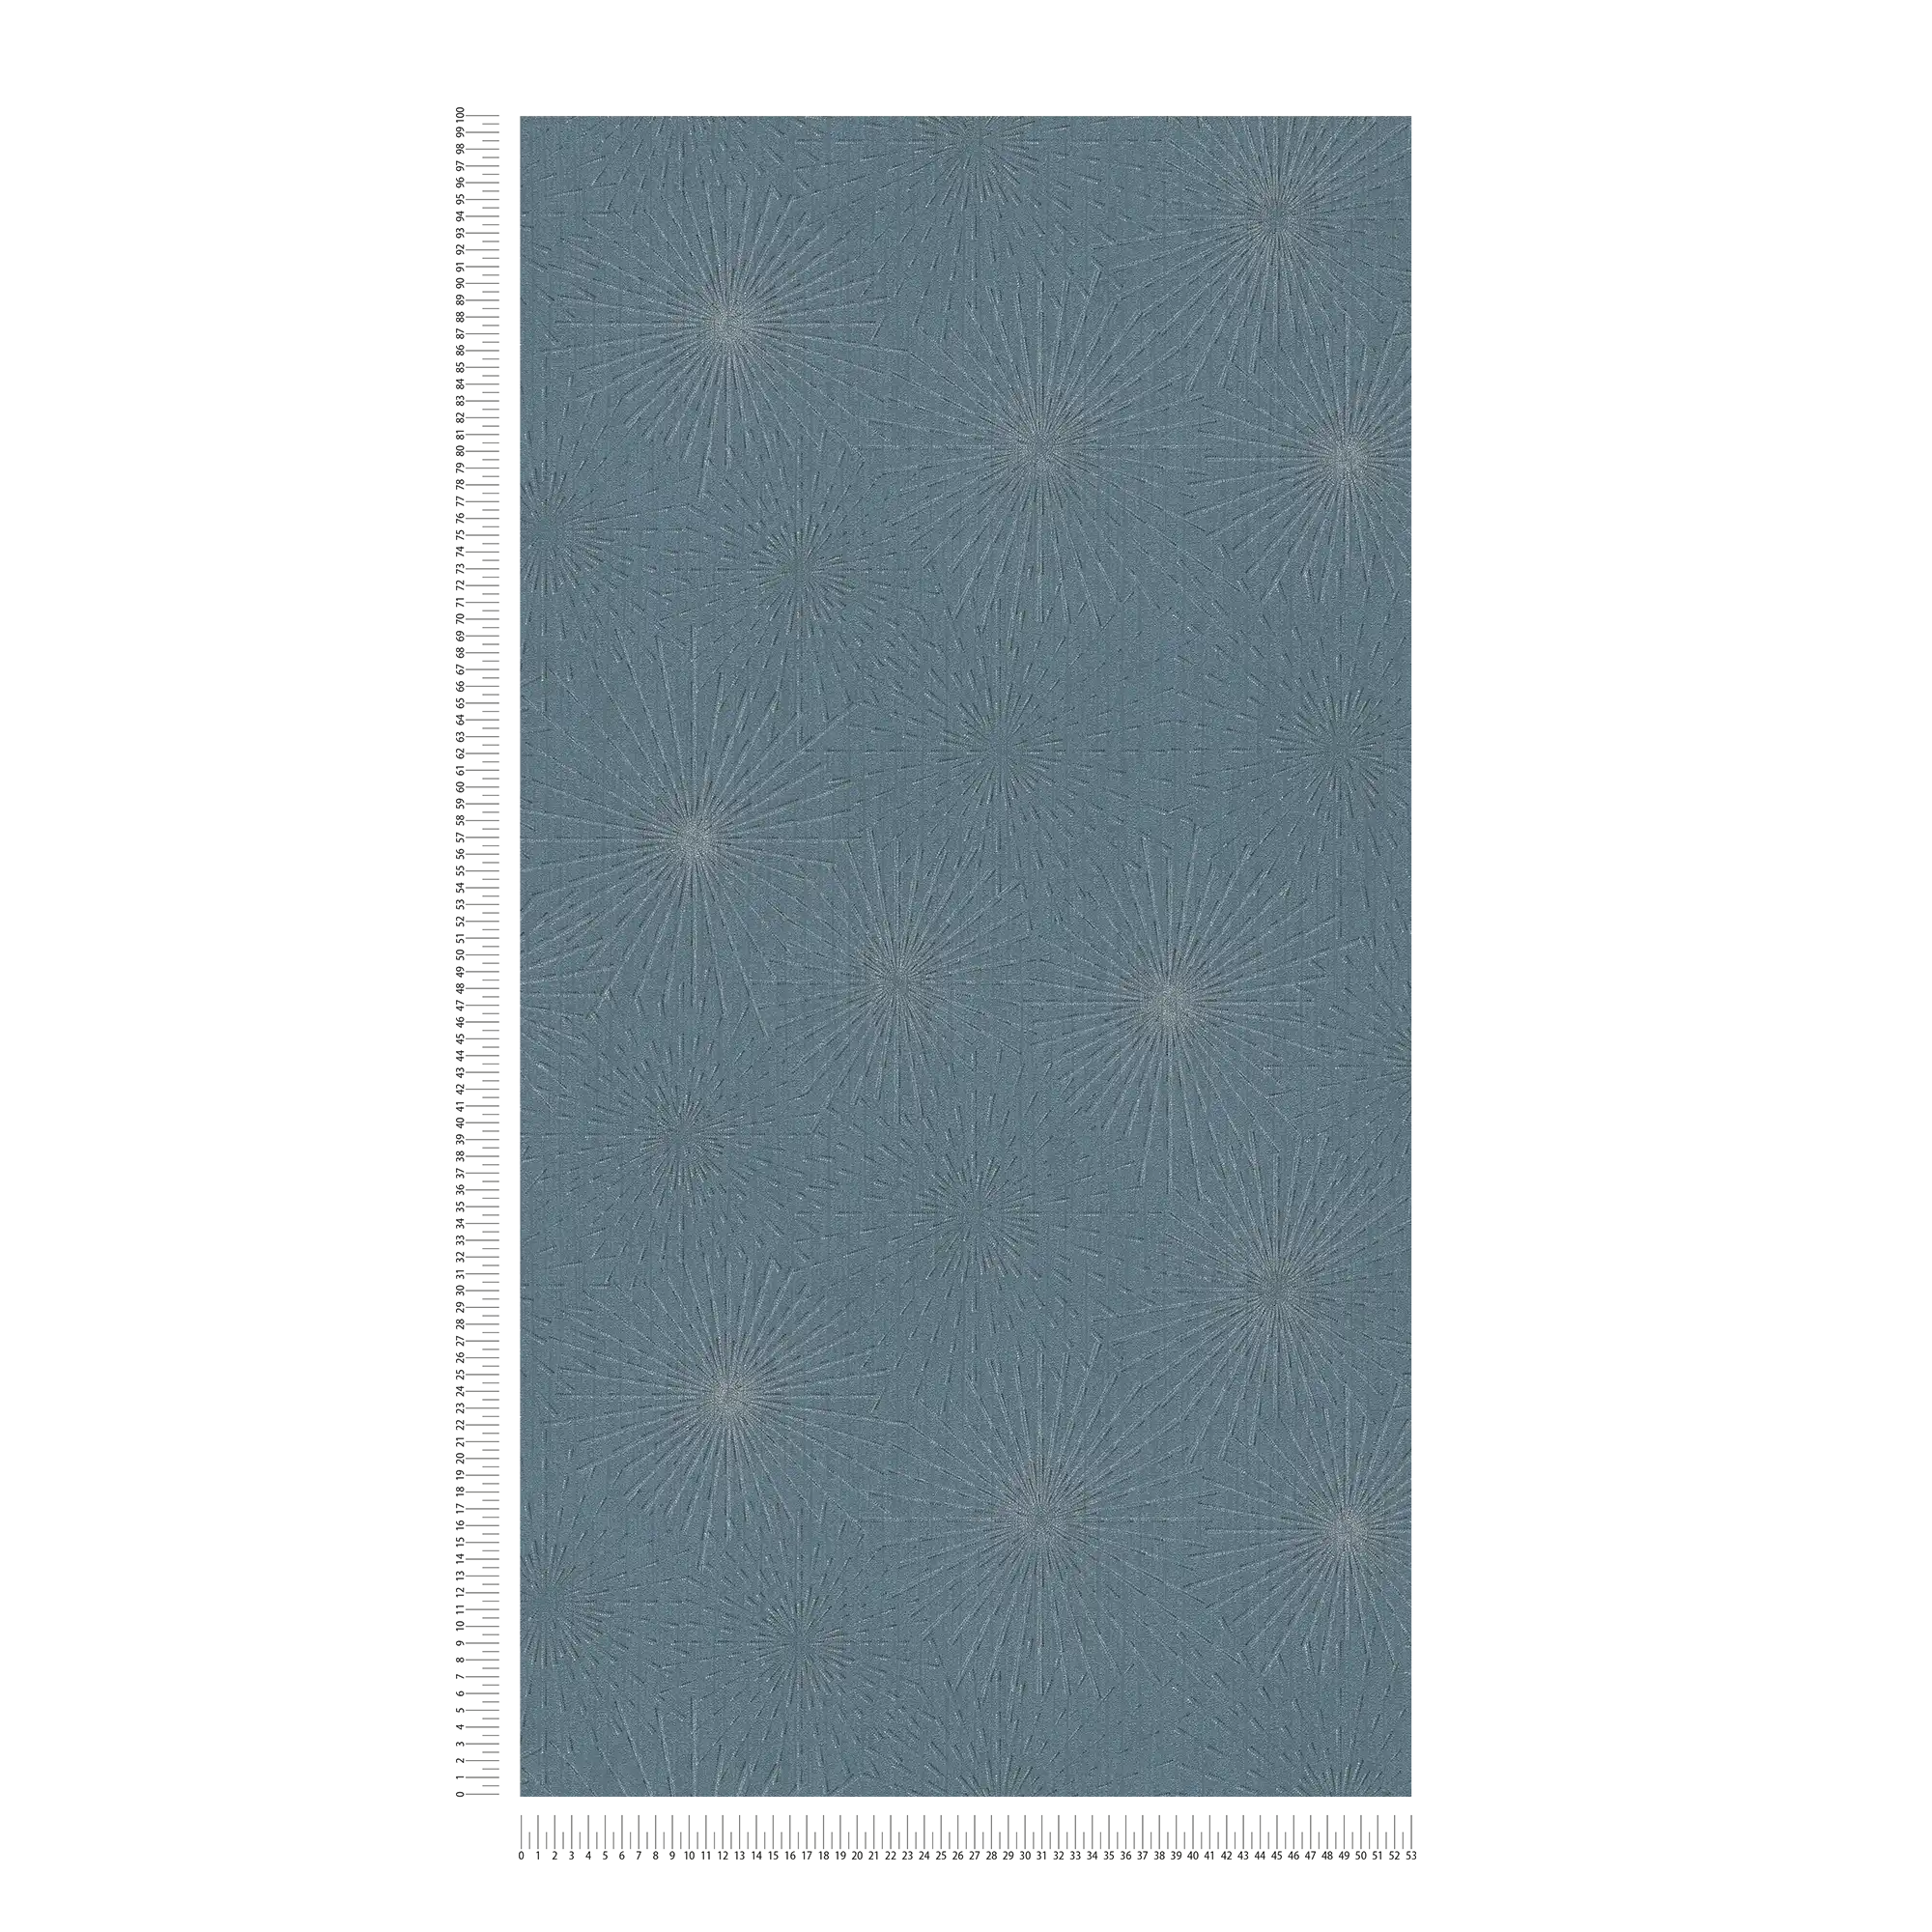             Carta da parati retro design starburst - blu, metallizzata
        